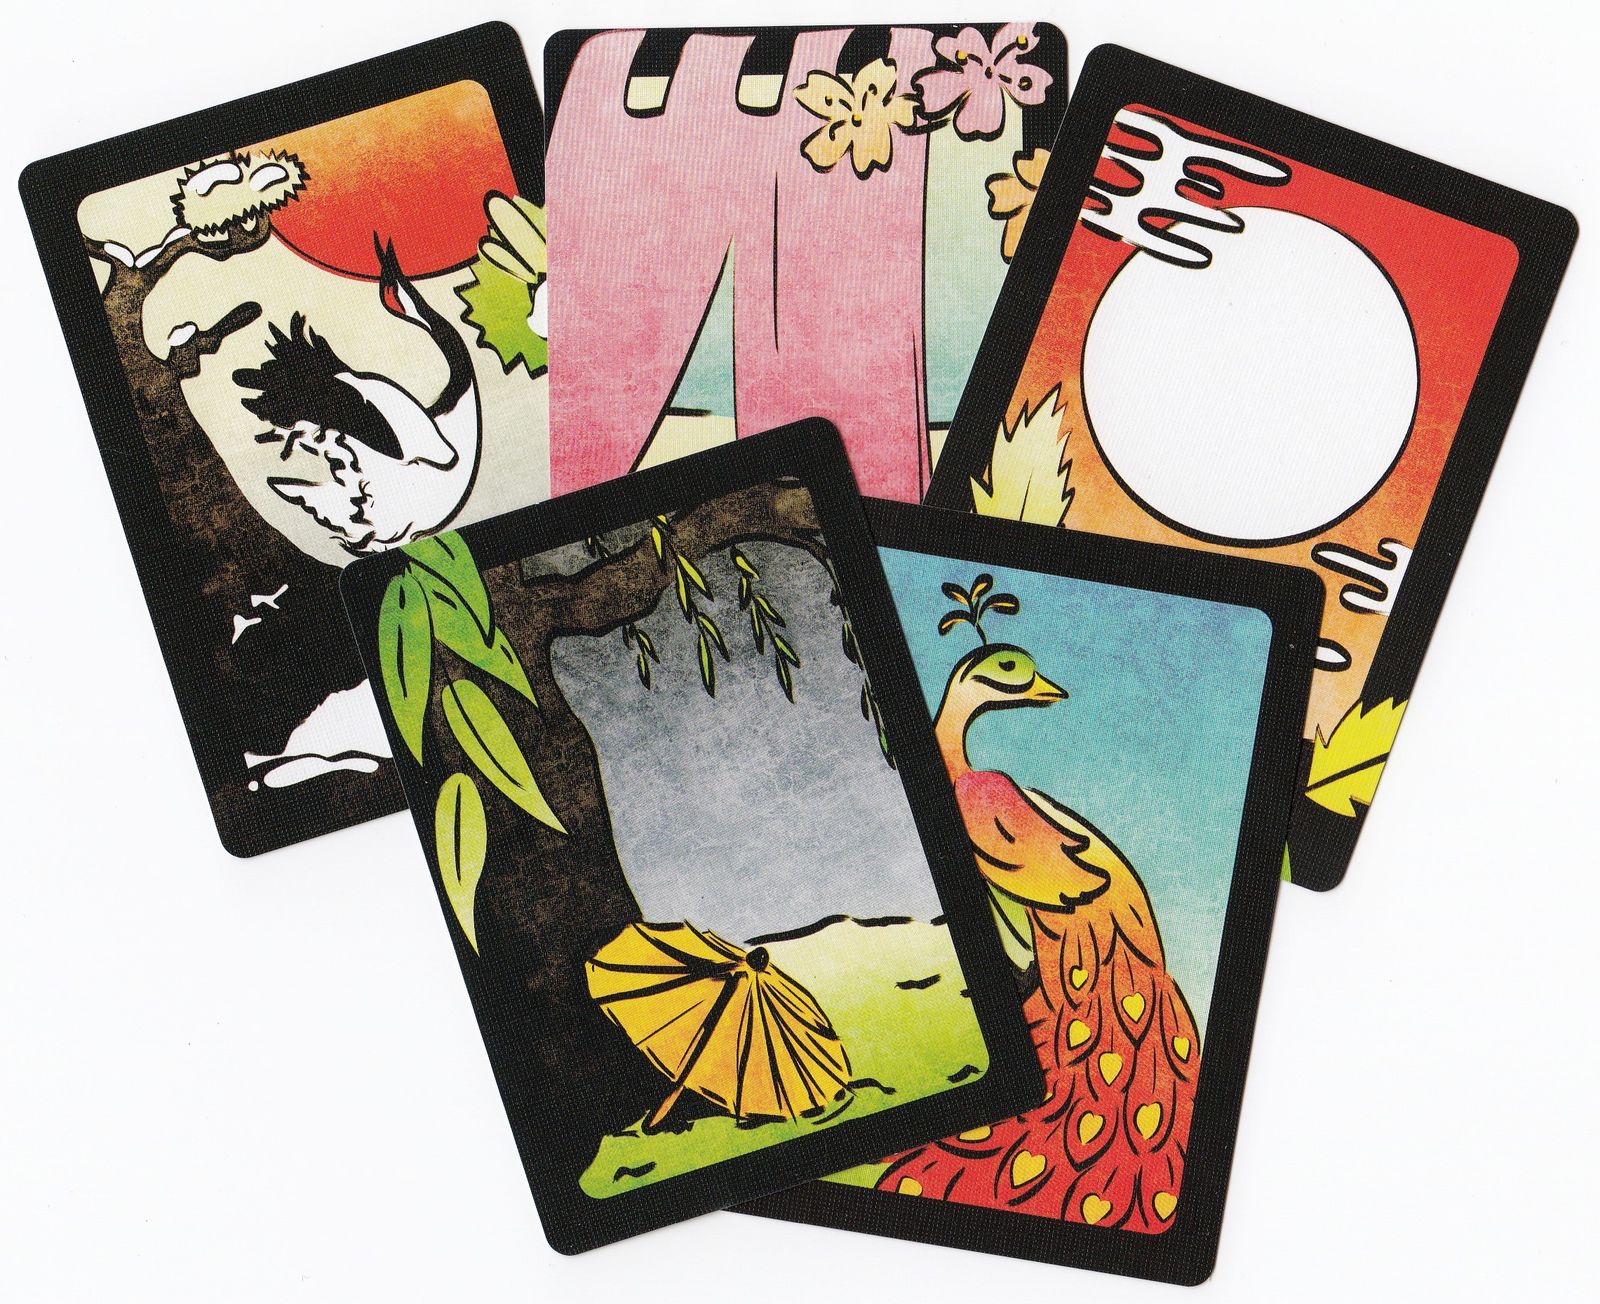 Five hanafuda cards drawn in a minimalistic but realistic style.